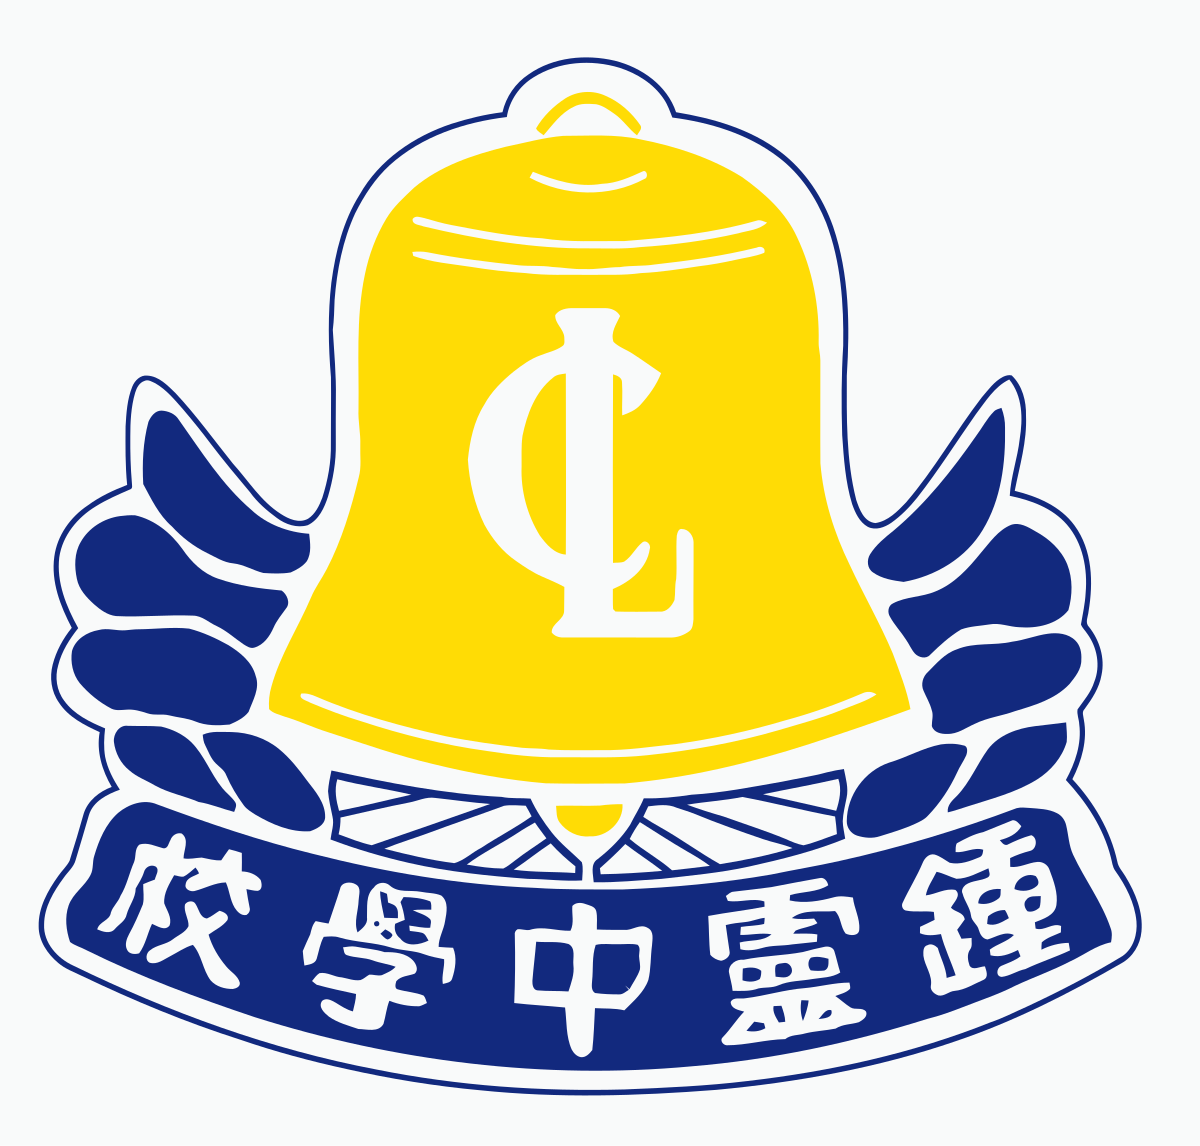 Chung Ling High School - Wikipedia